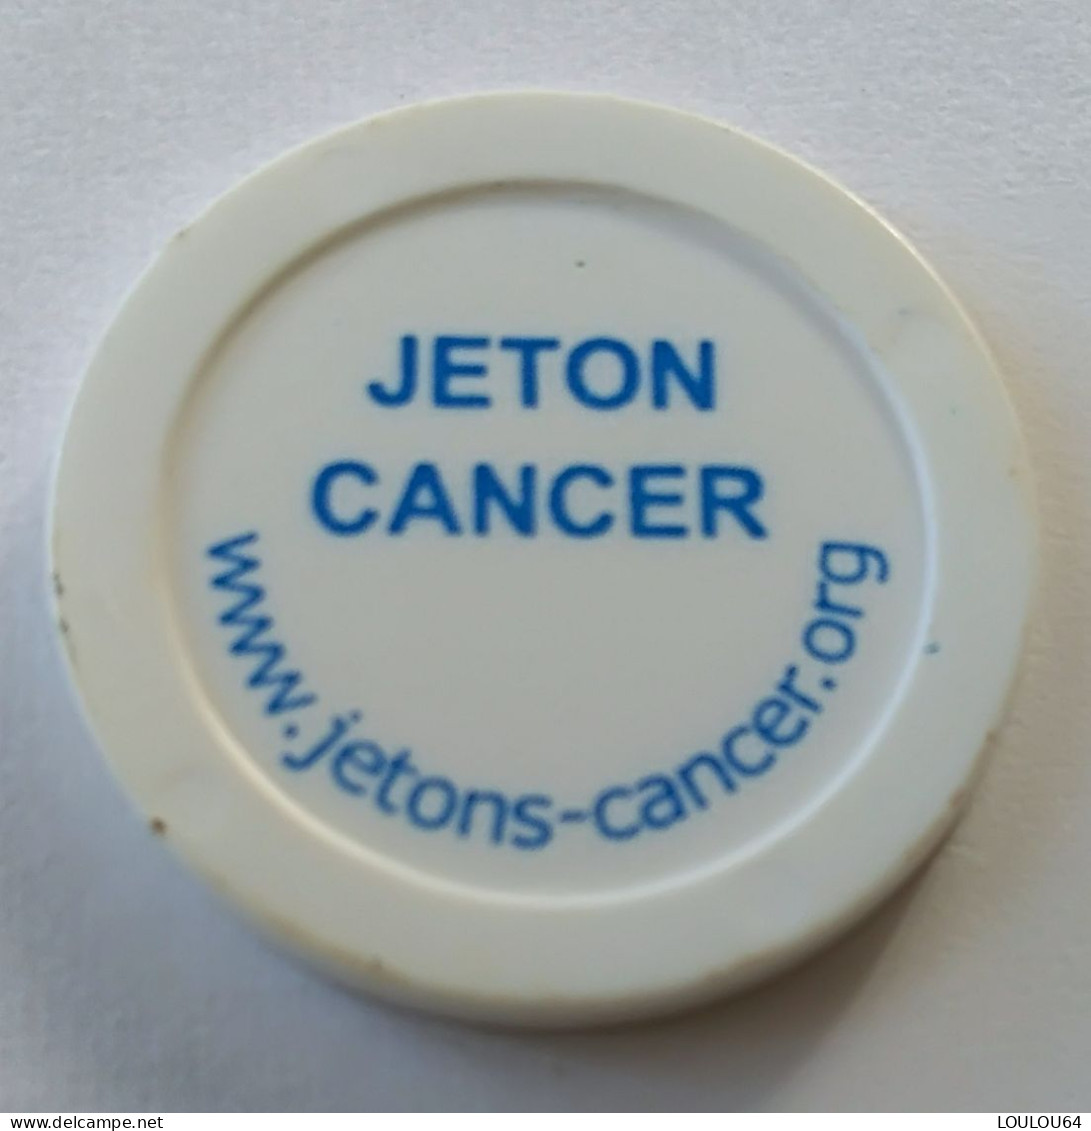 Jeton De Caddie - ROTARY INTERNATIONAL - JETON CANCER - En Plastique - - Jetons De Caddies